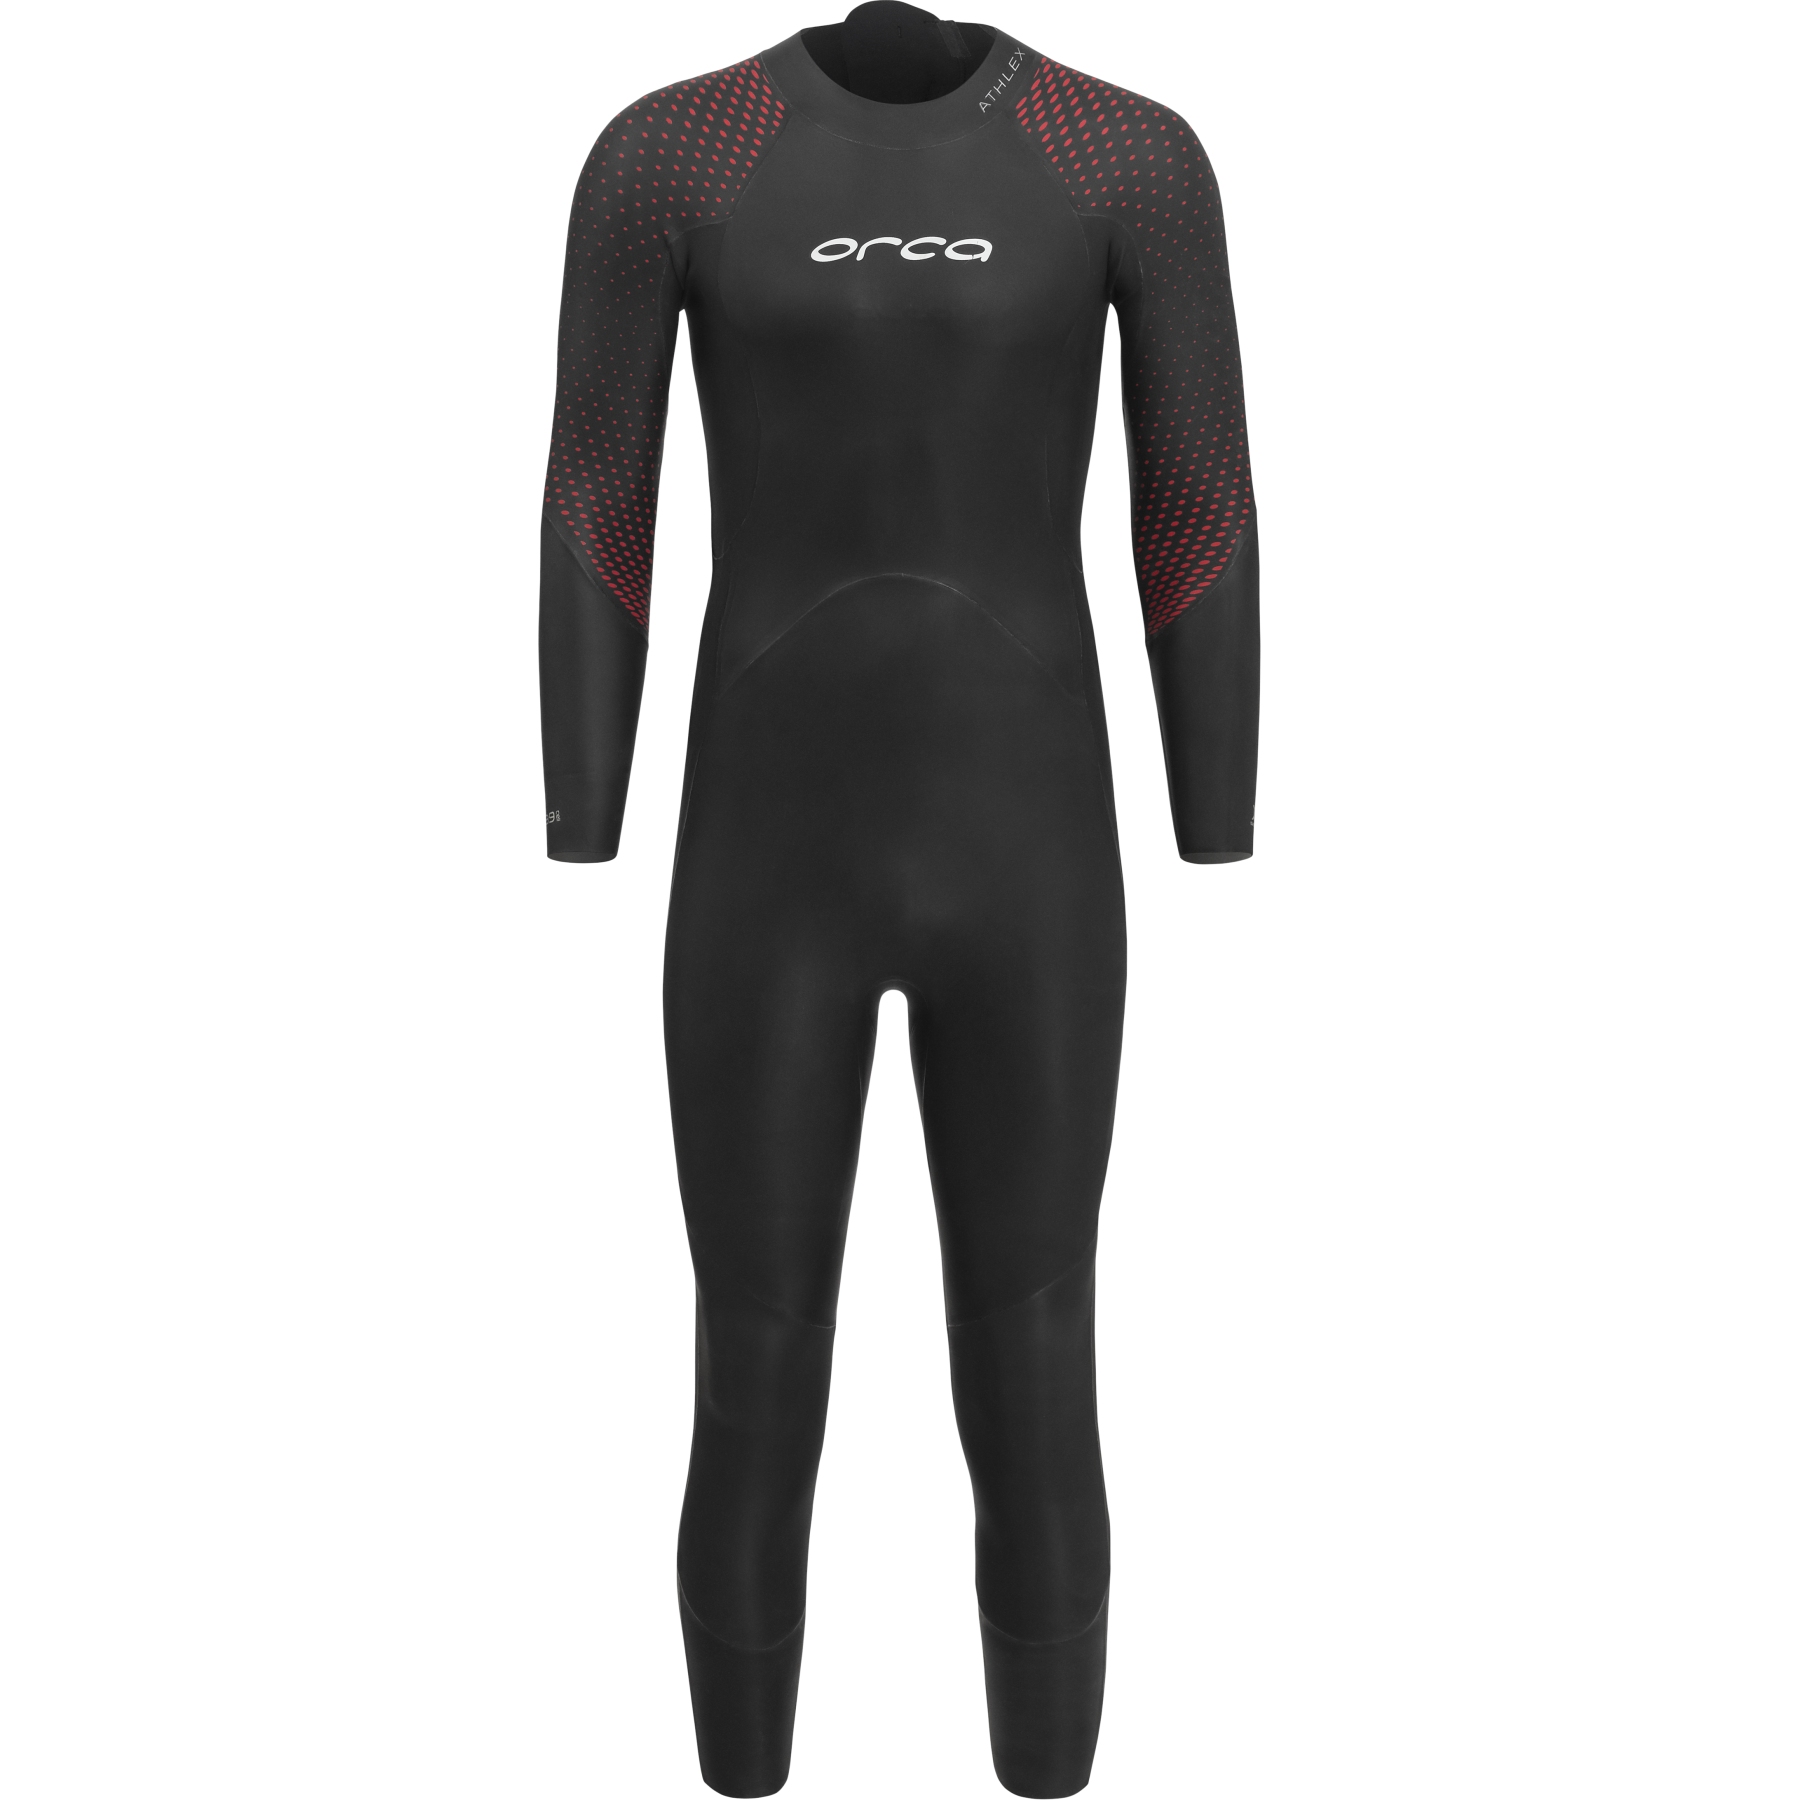 Productfoto van Orca Athlex Float Wetsuit - red buoyancy